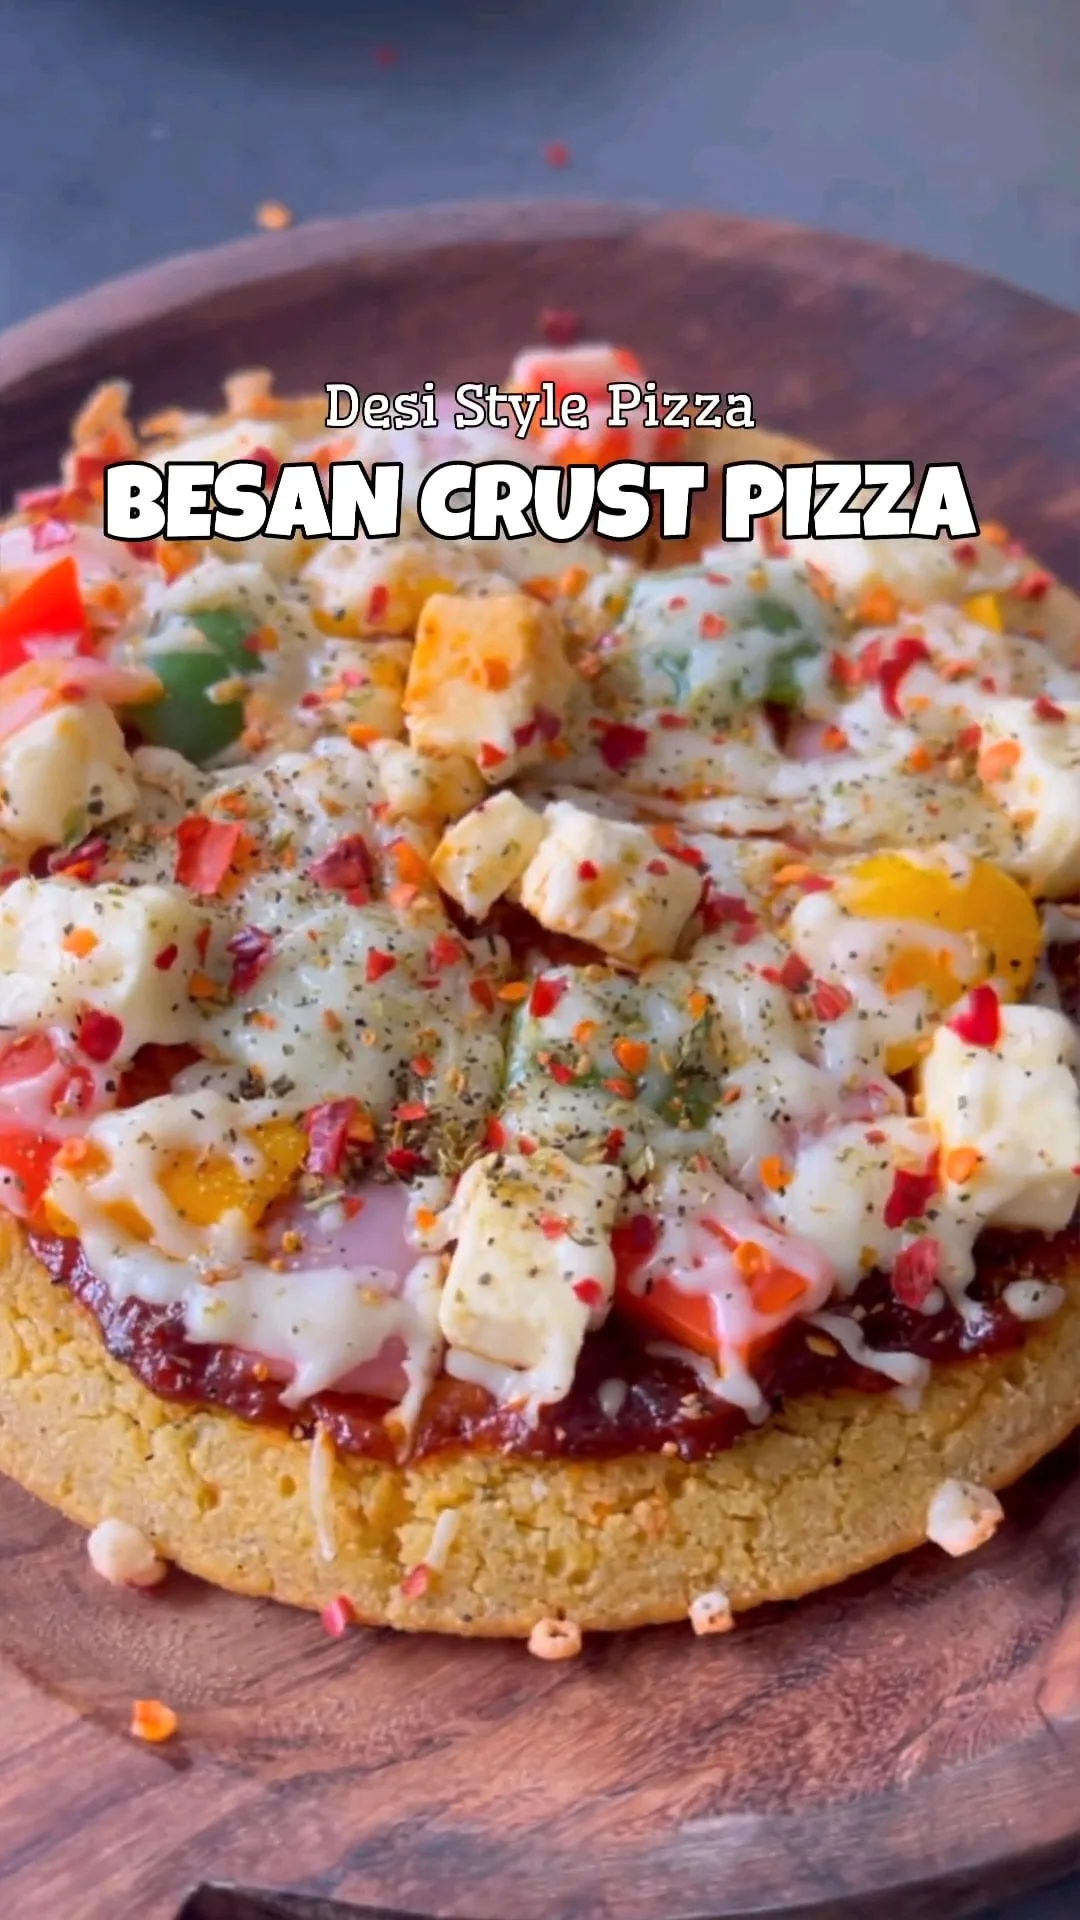 Besan Crust Pizza